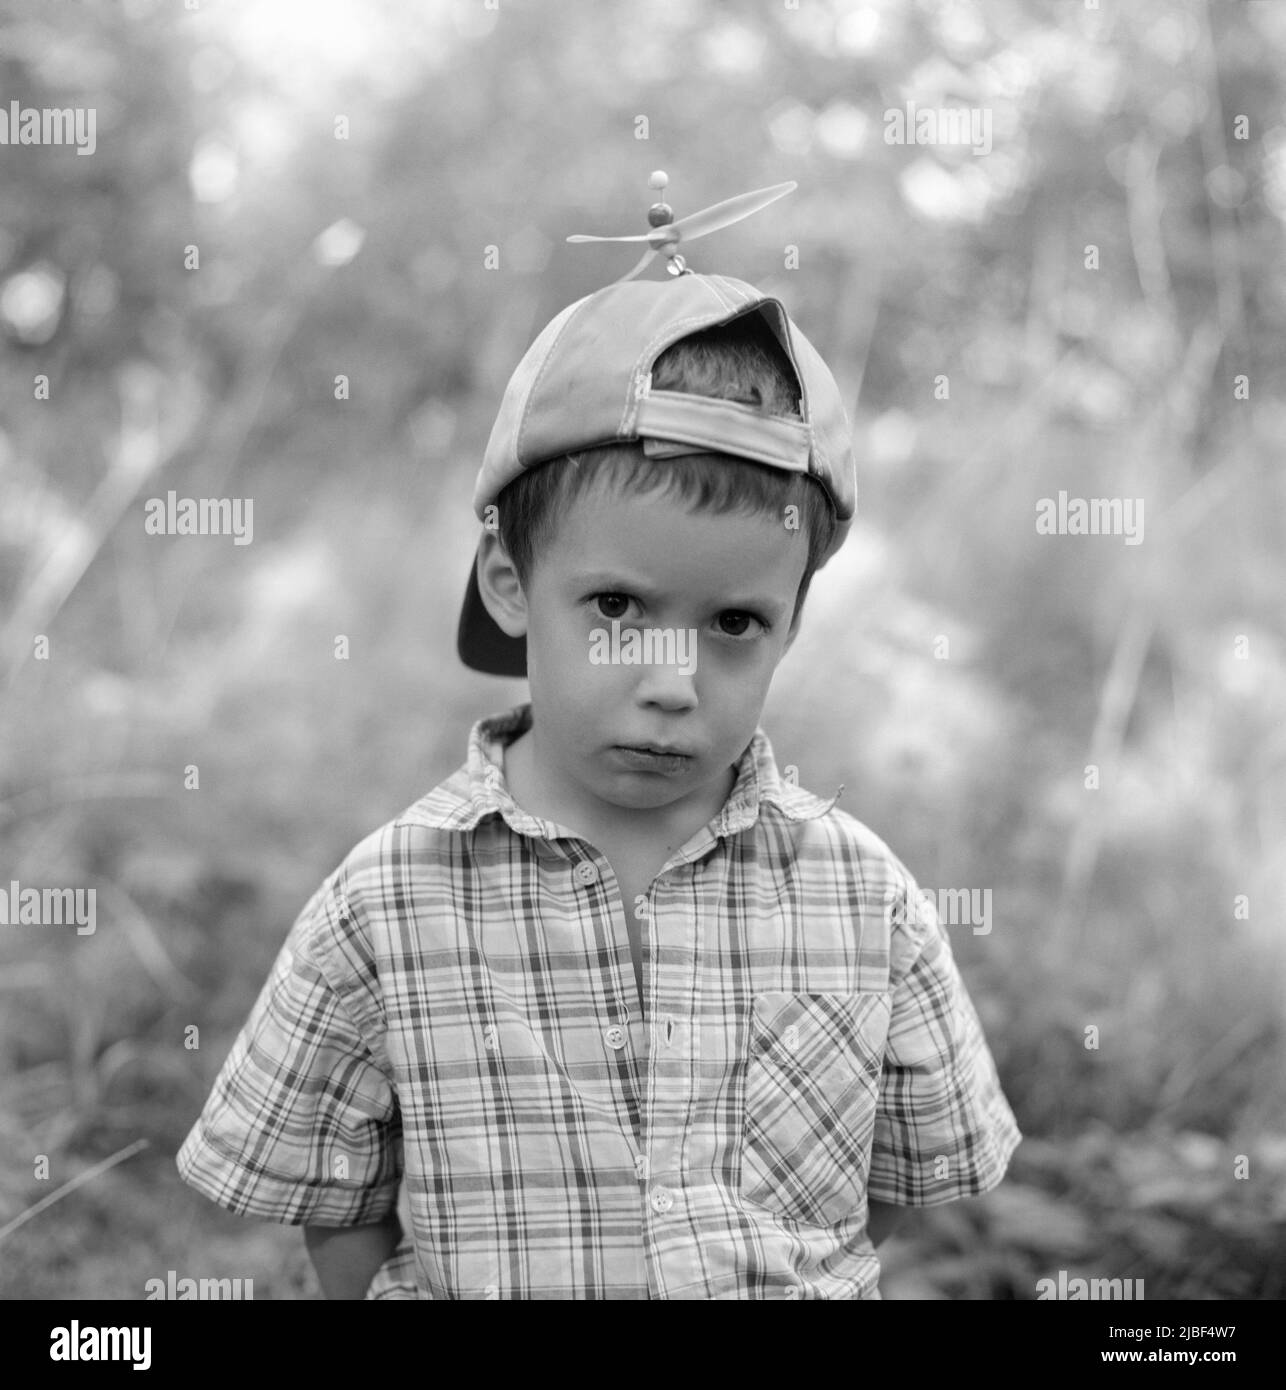 Portrait of boy in propeller hat Stock Photo